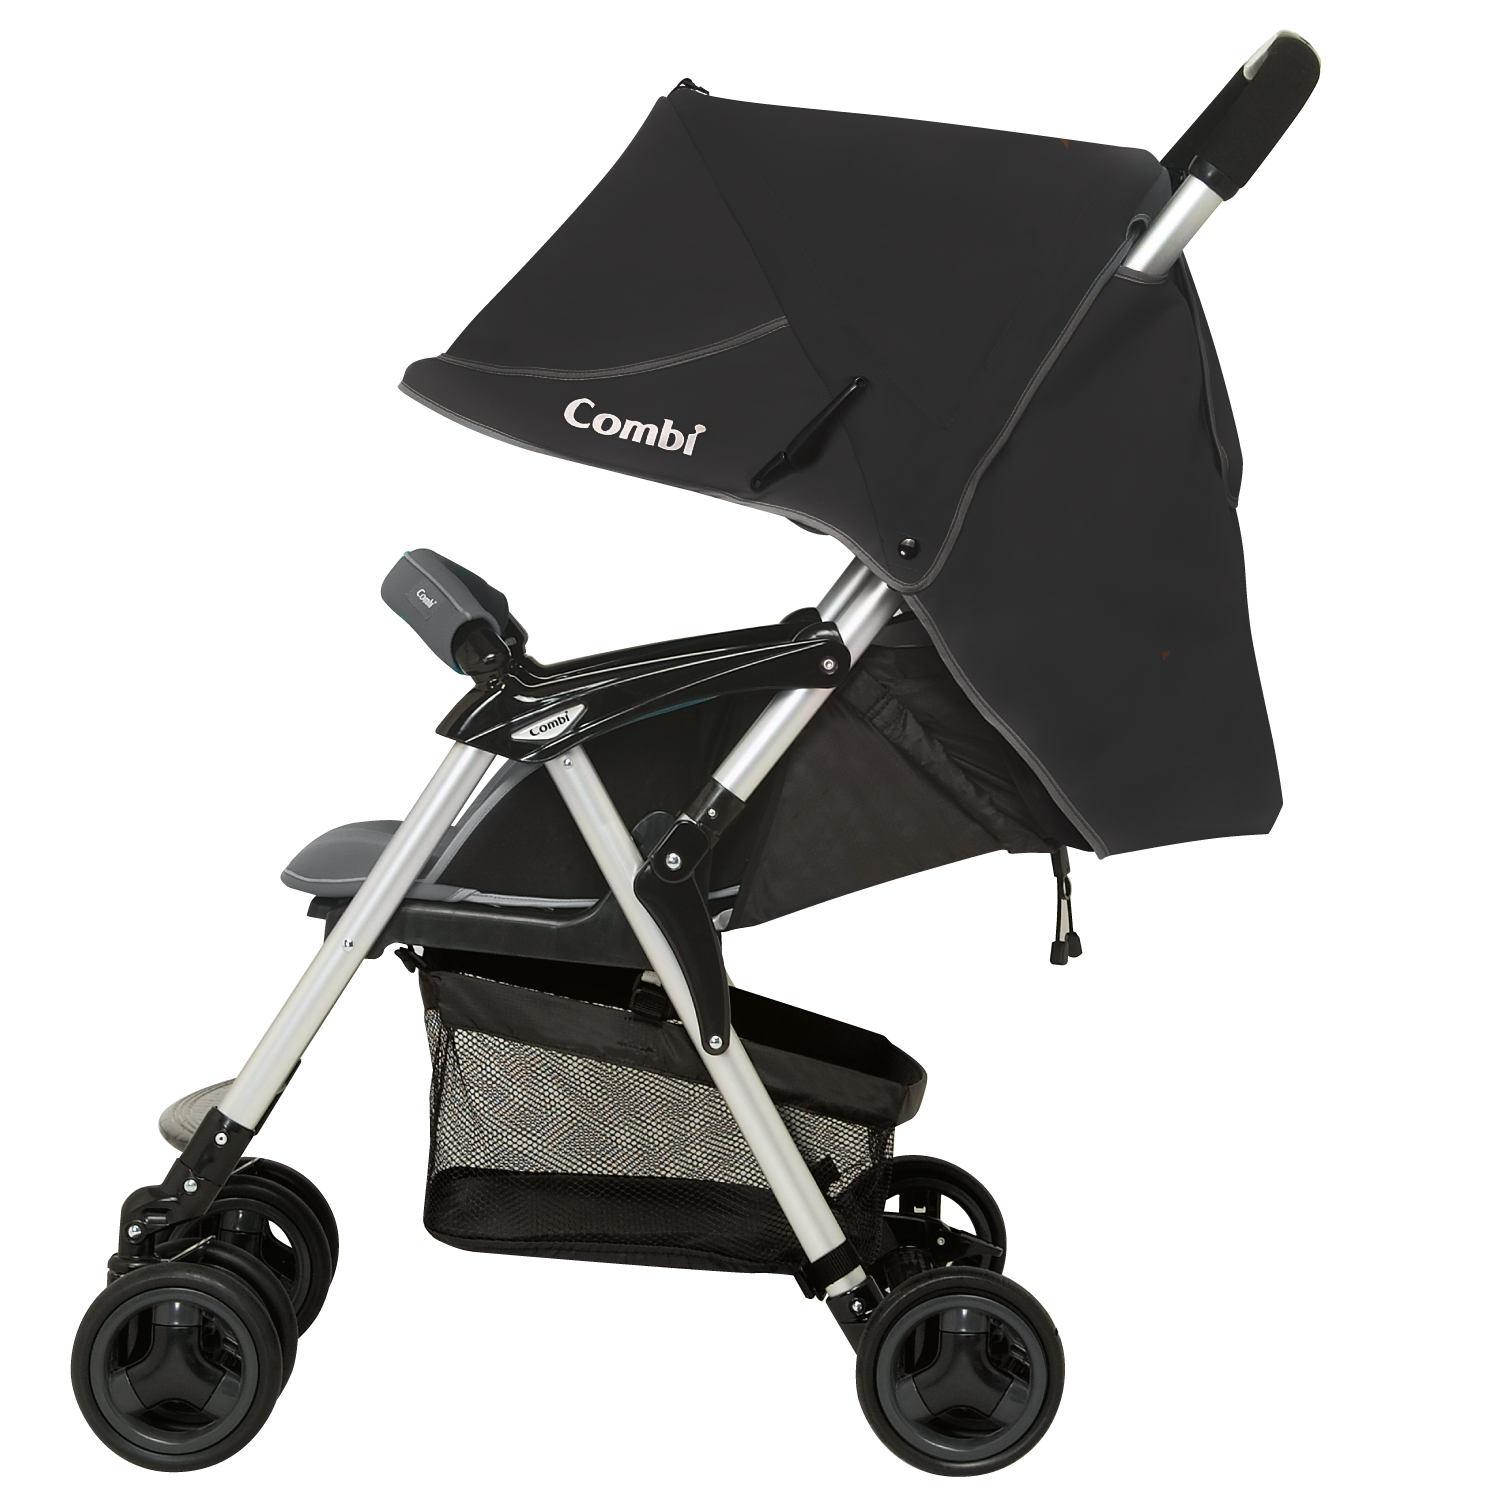 COMBI - детская коляска Well Carry Jet Black (BK) - вес 5,7 кг (143868)